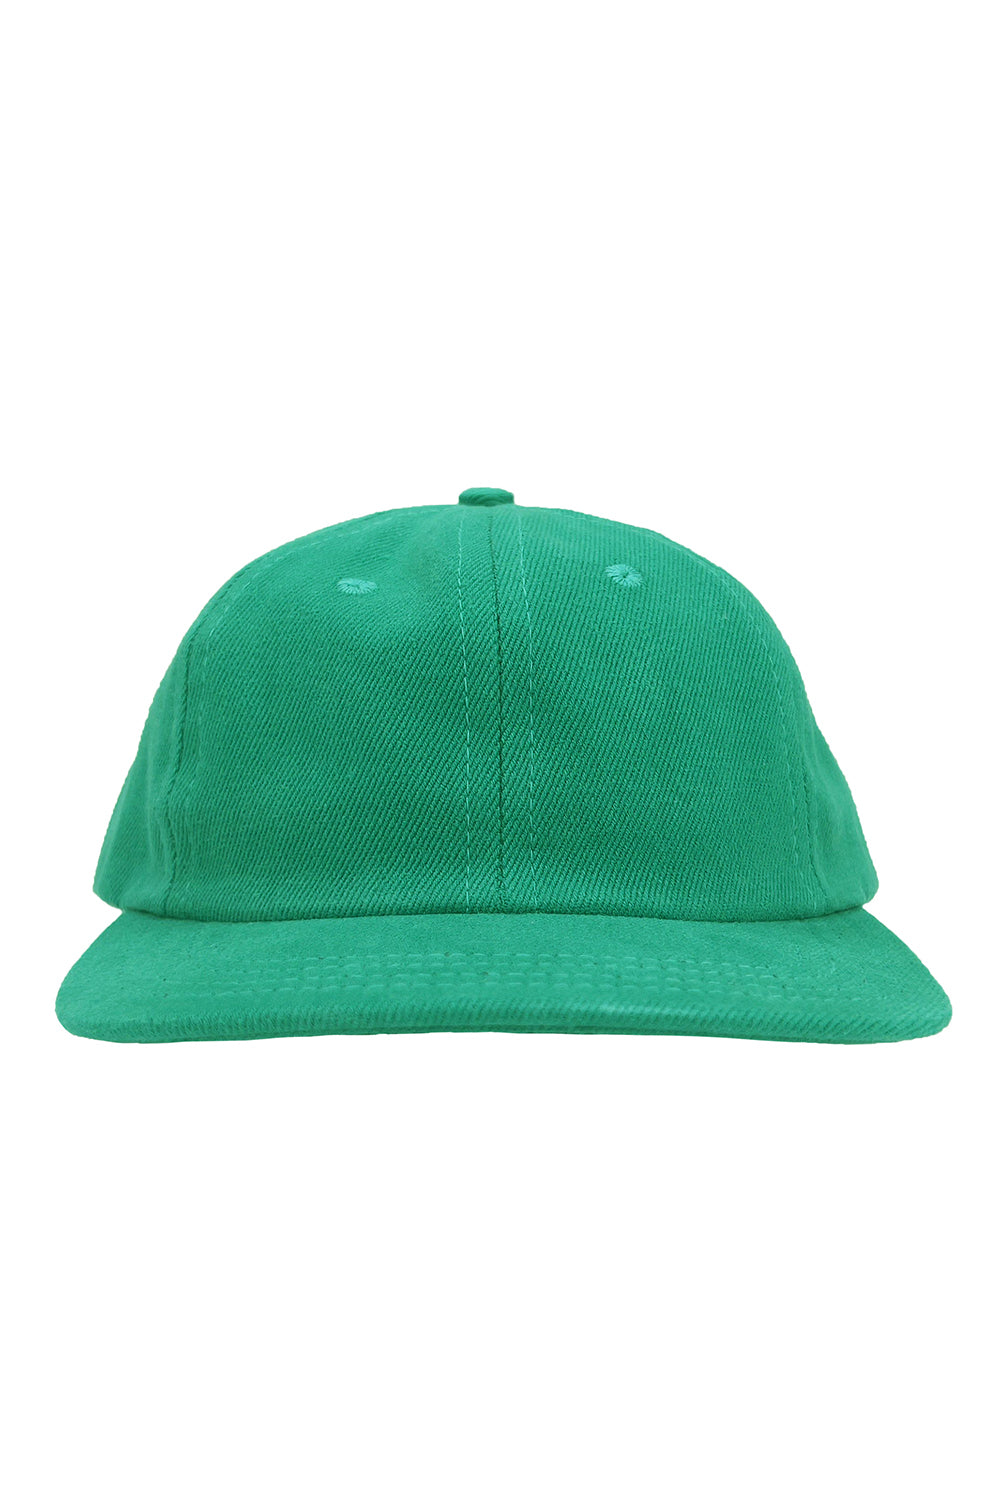 Chenga Twill Cap | Jungmaven Hemp Clothing & Accessories / Color: Jade Green